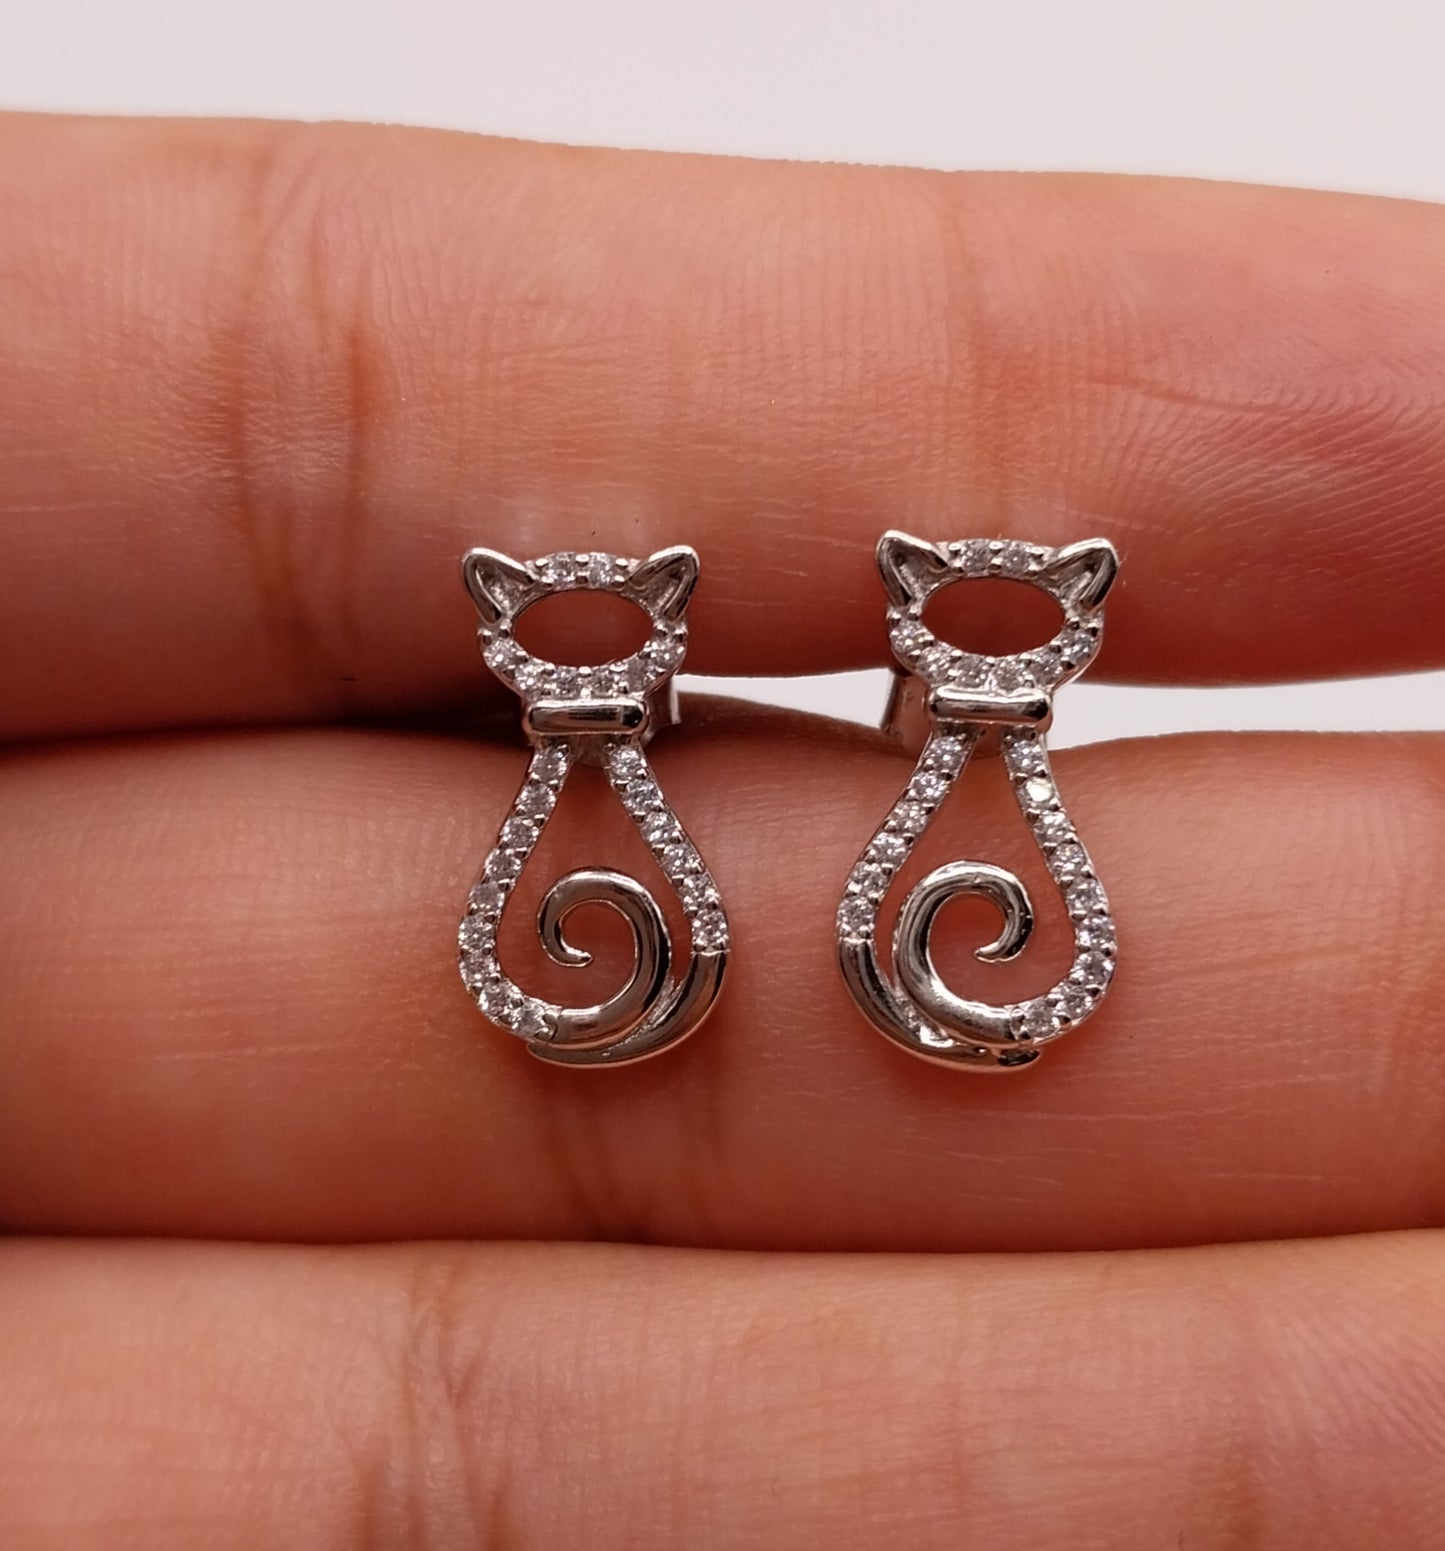 Cat Earrings with Cubic Zirconia Stones